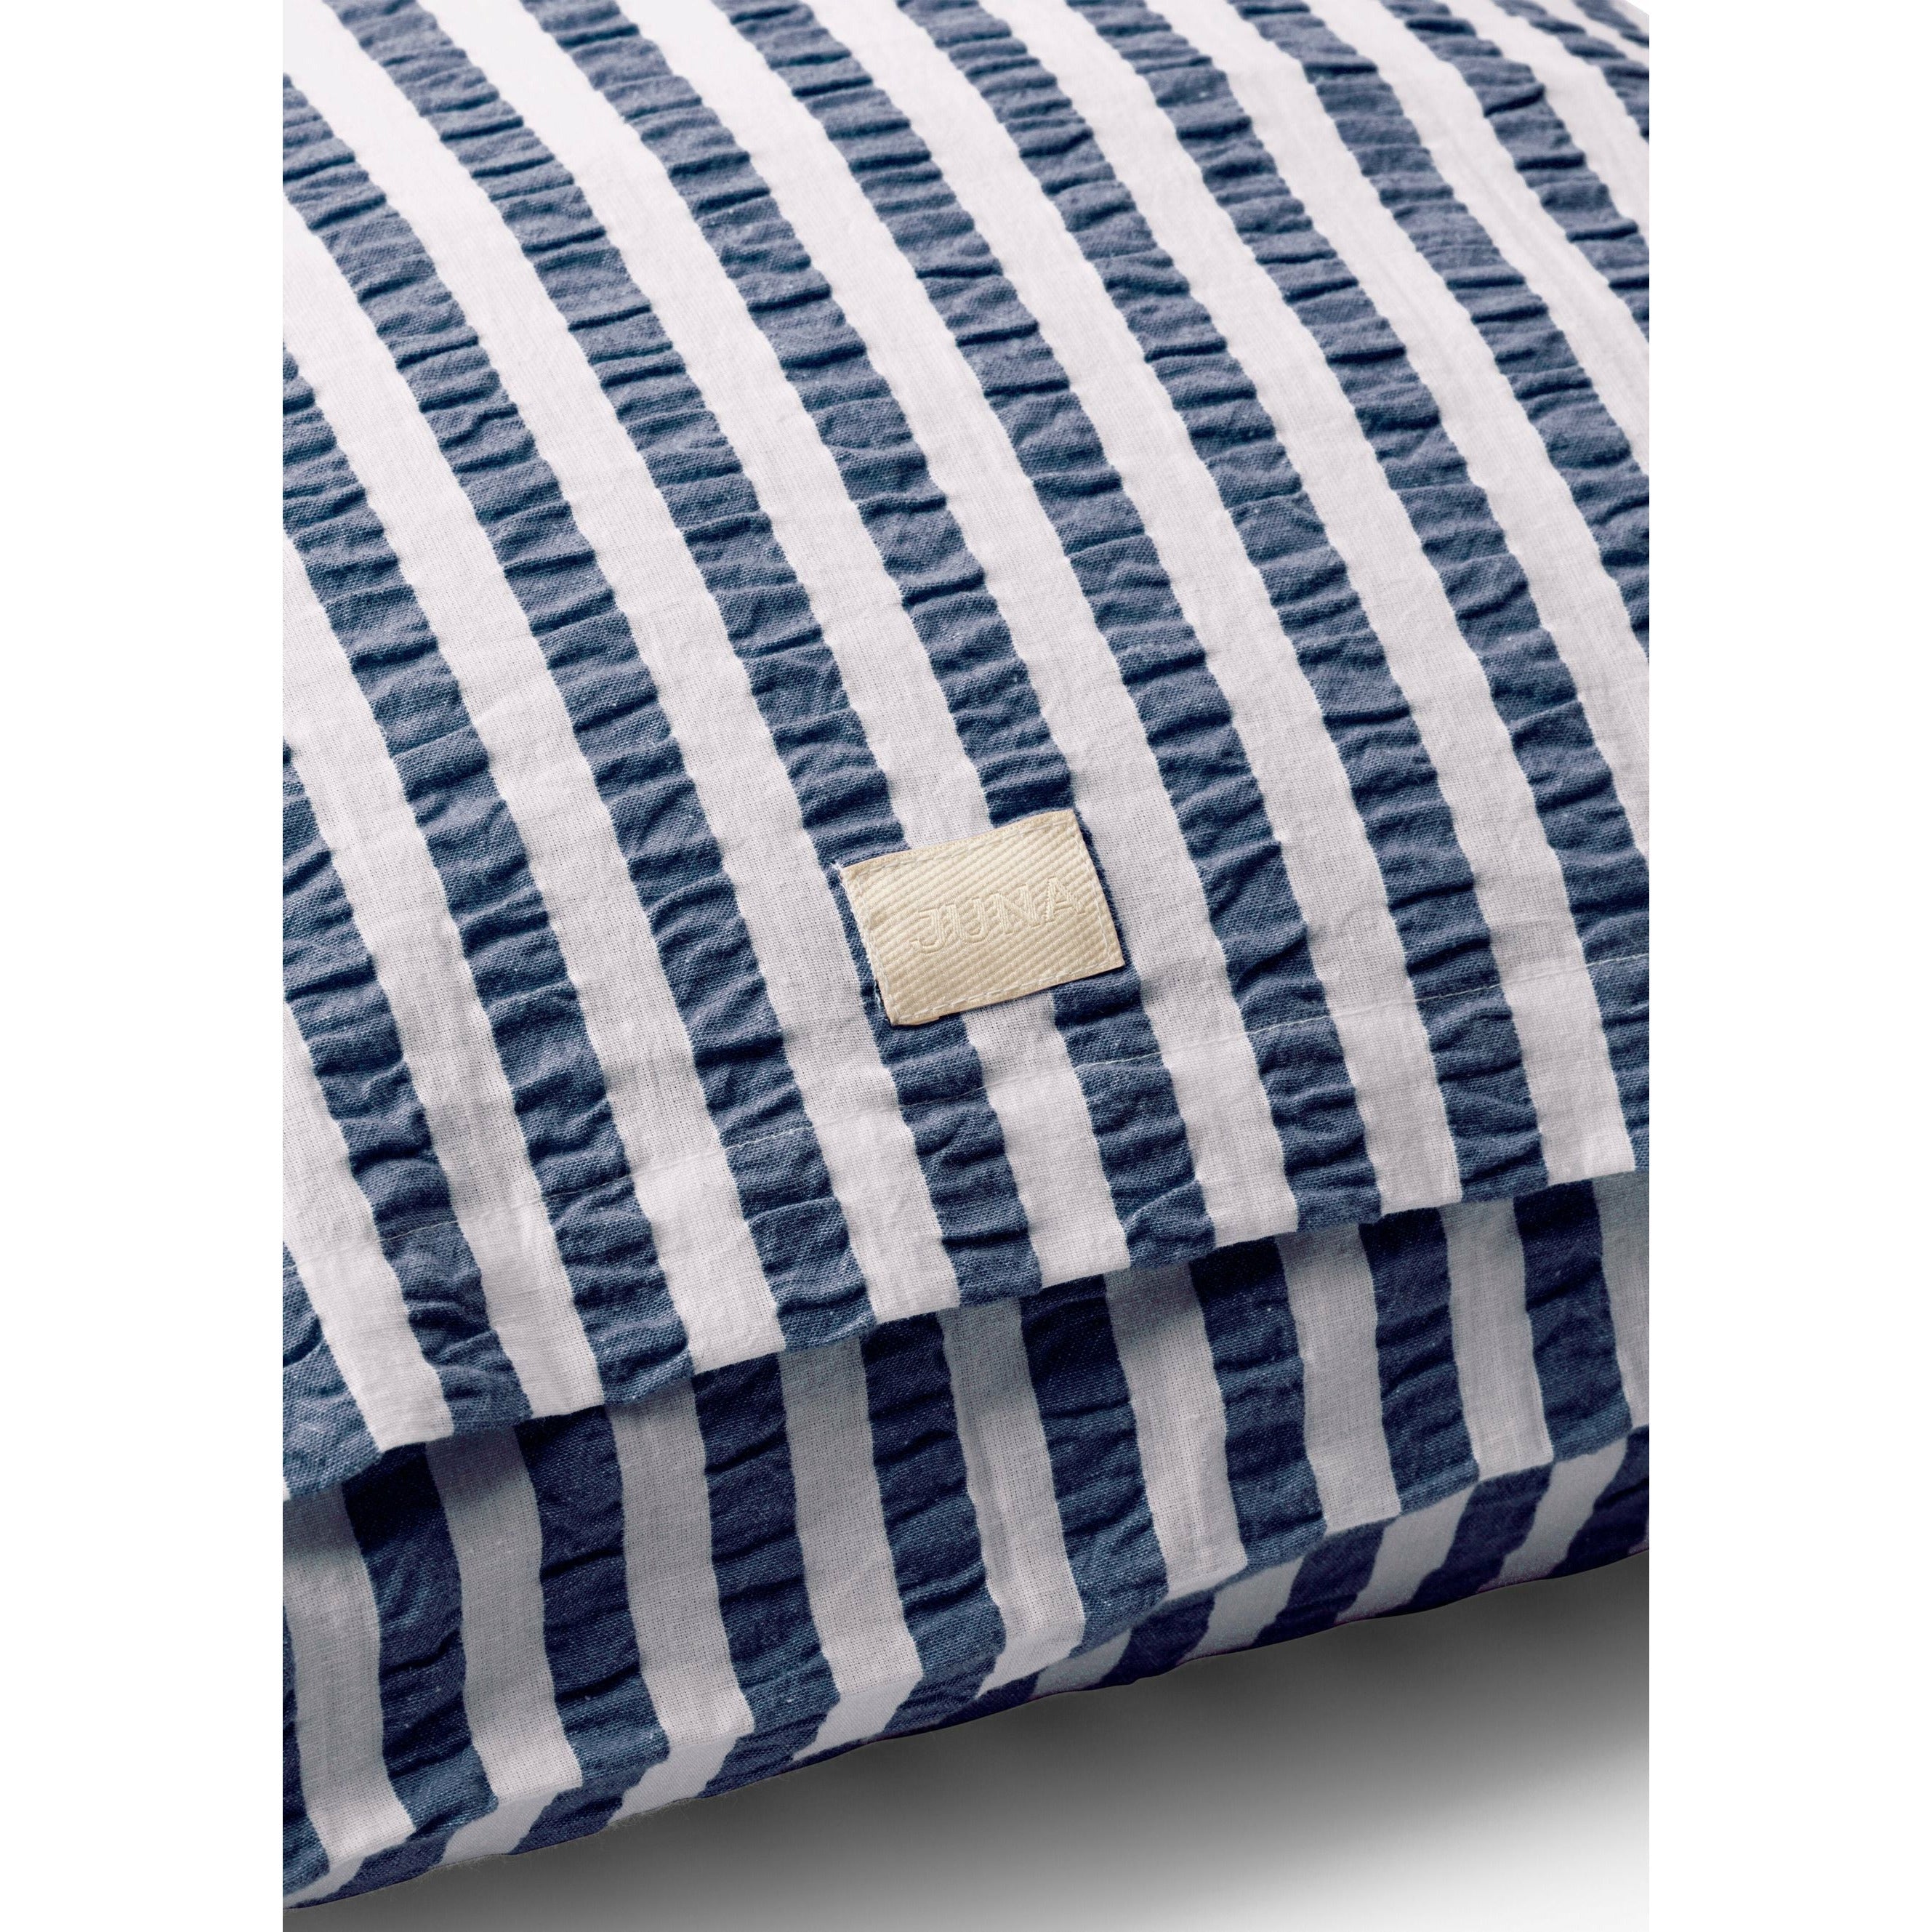 Juna Bæk & Bølge Lines Pillowcase 63x60 cm, ciemnoniebieski/biały